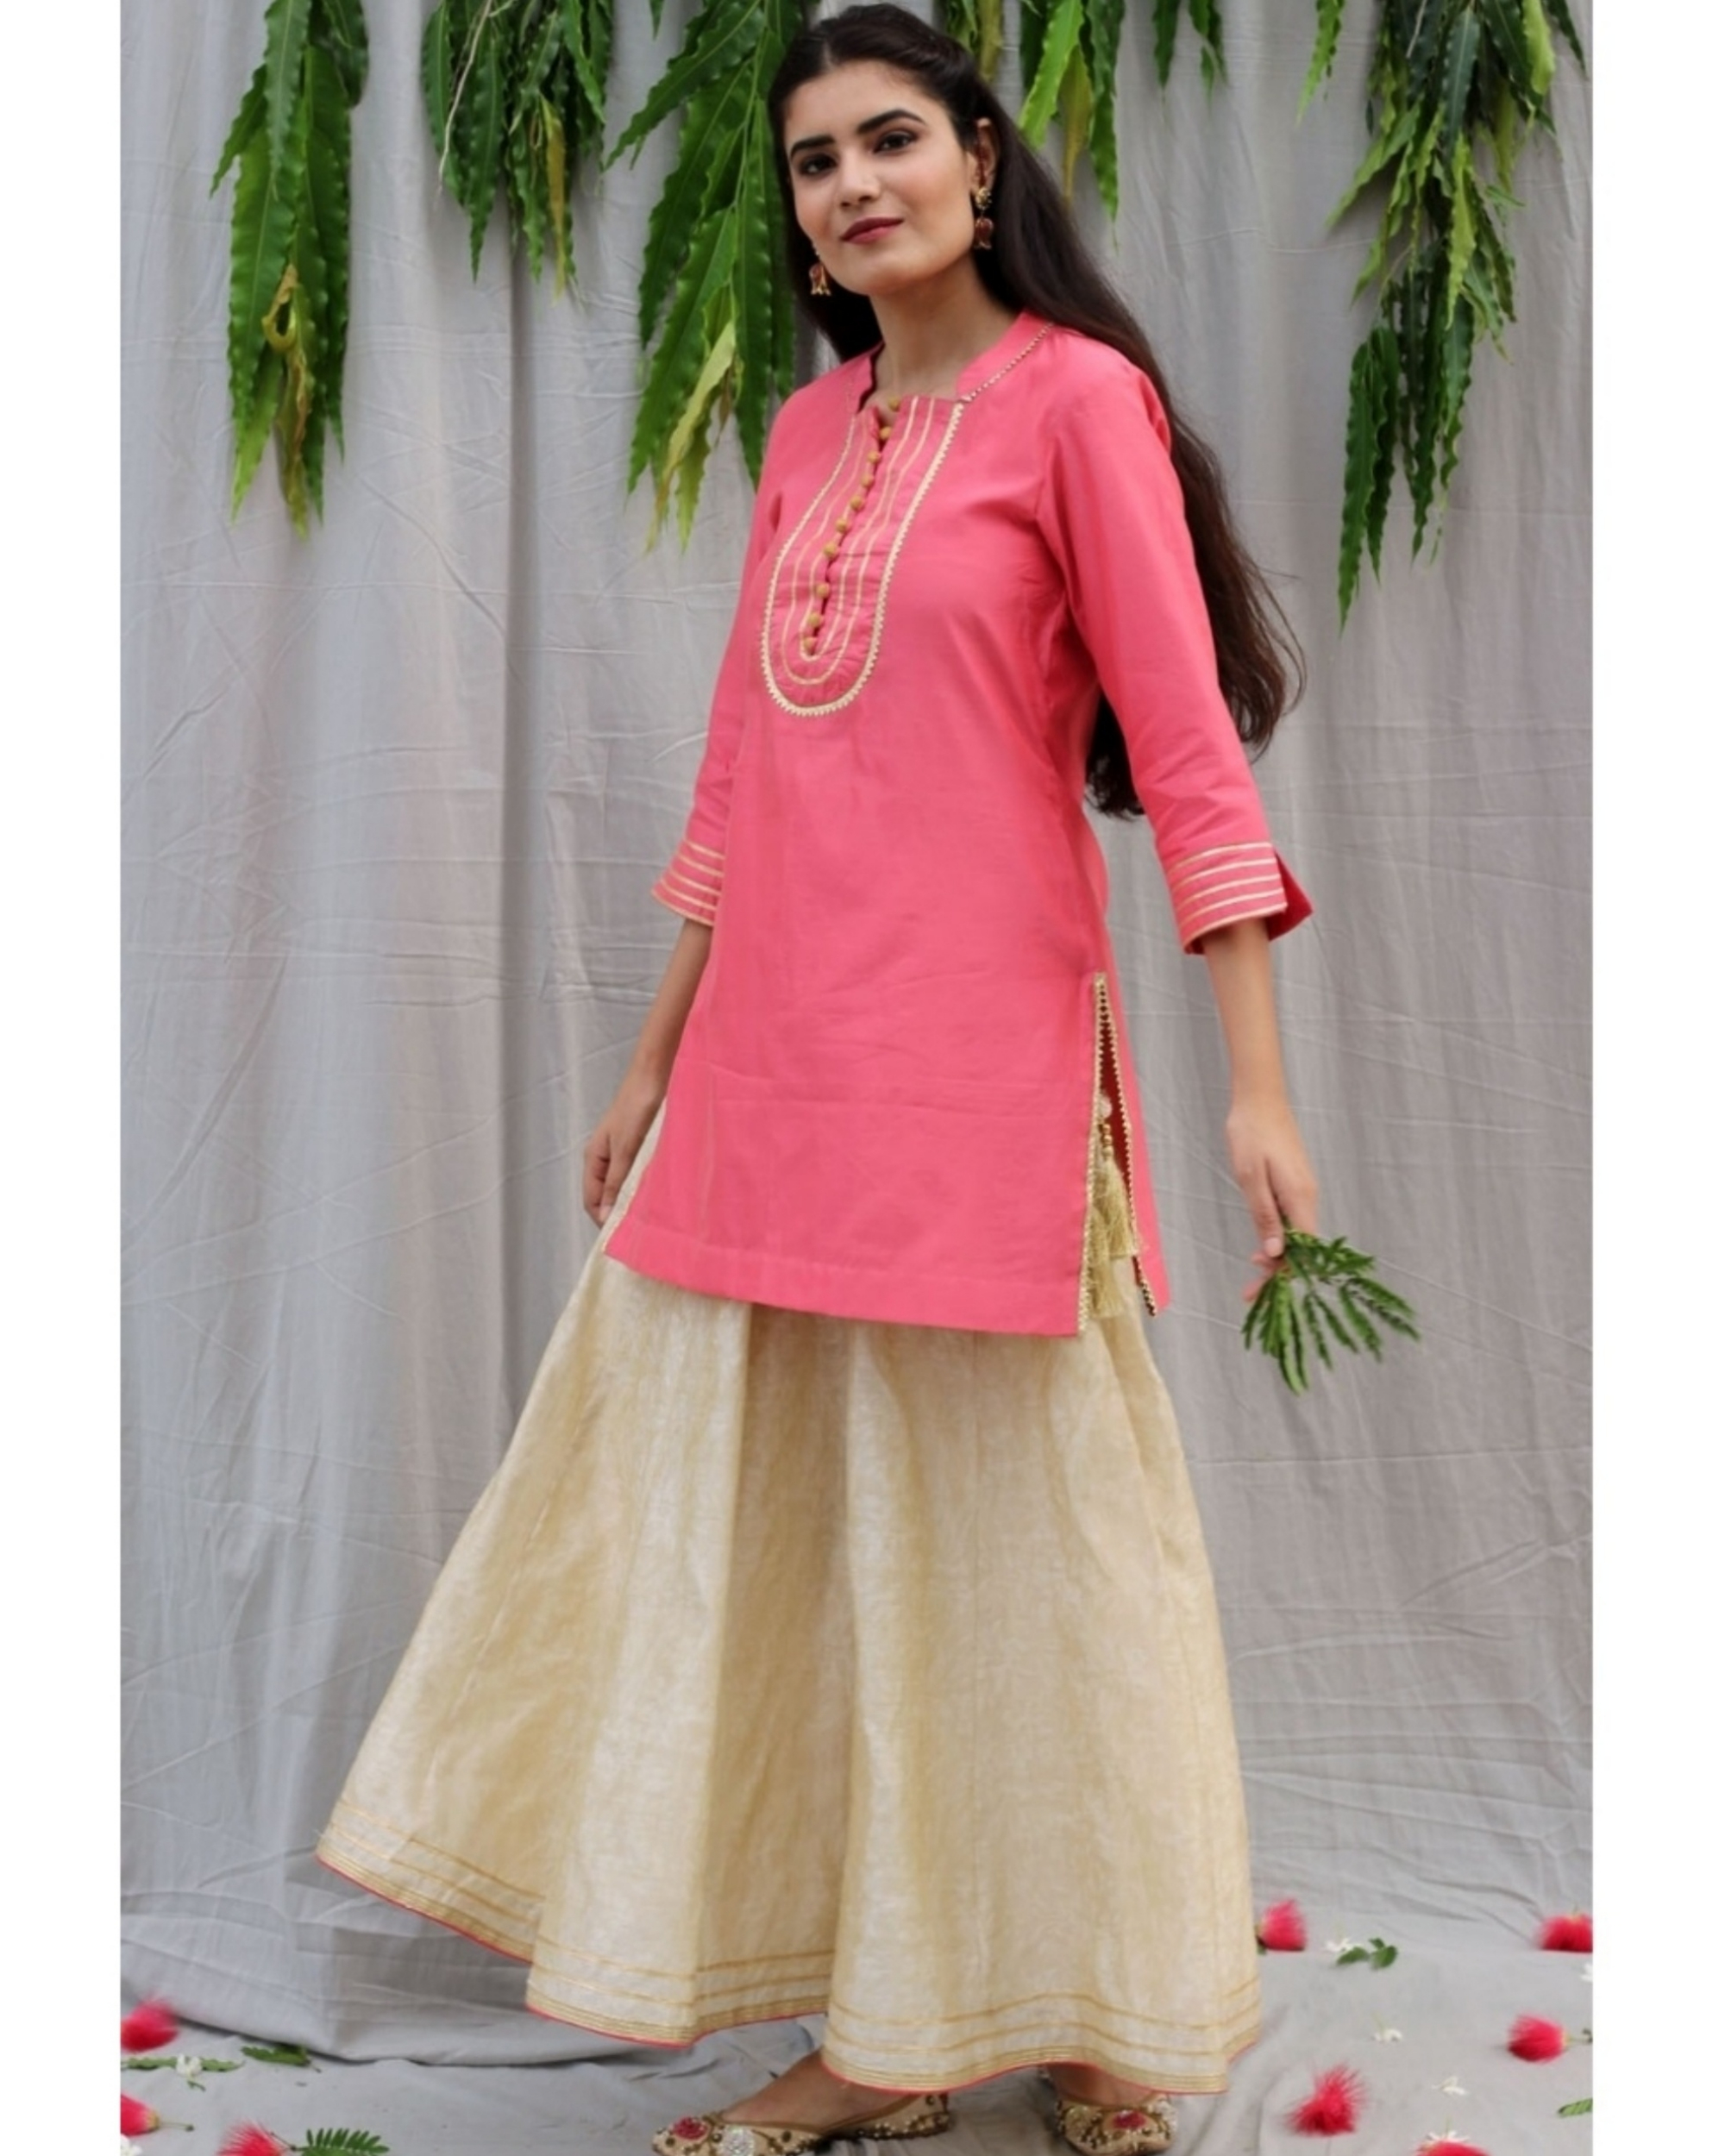 Details more than 87 skirt with short kurti designs - thtantai2